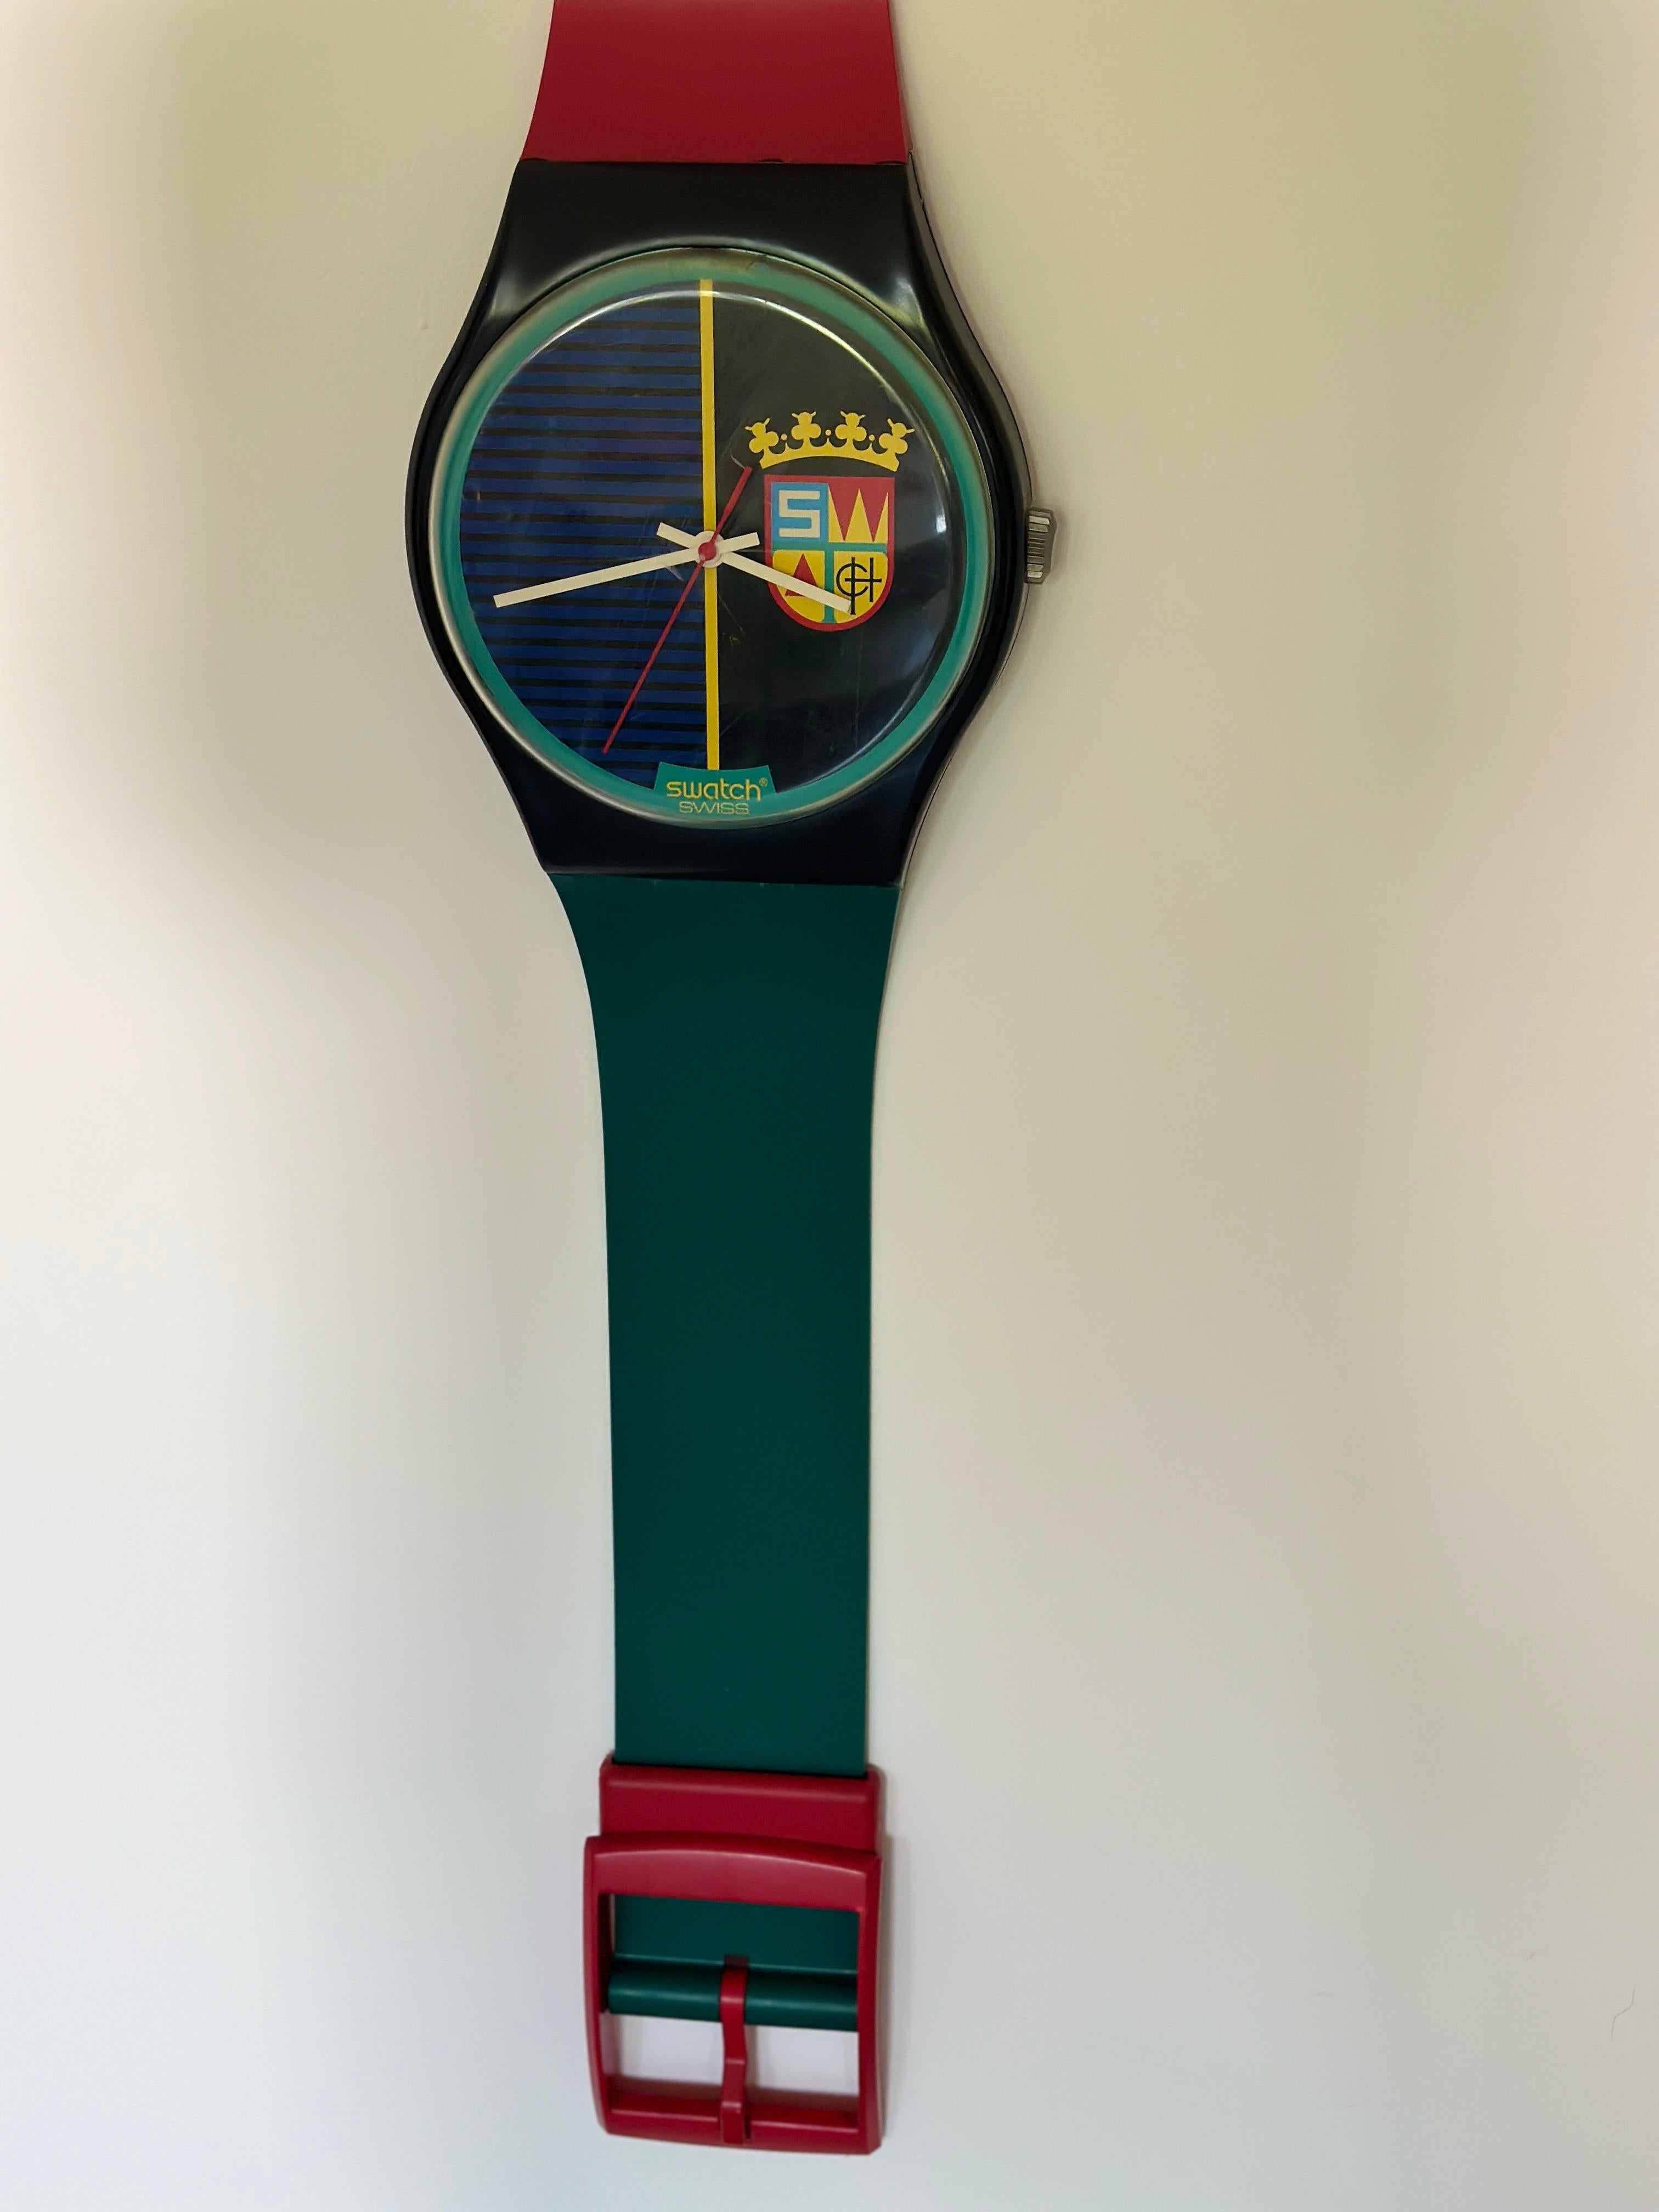 swatch watch wall clock